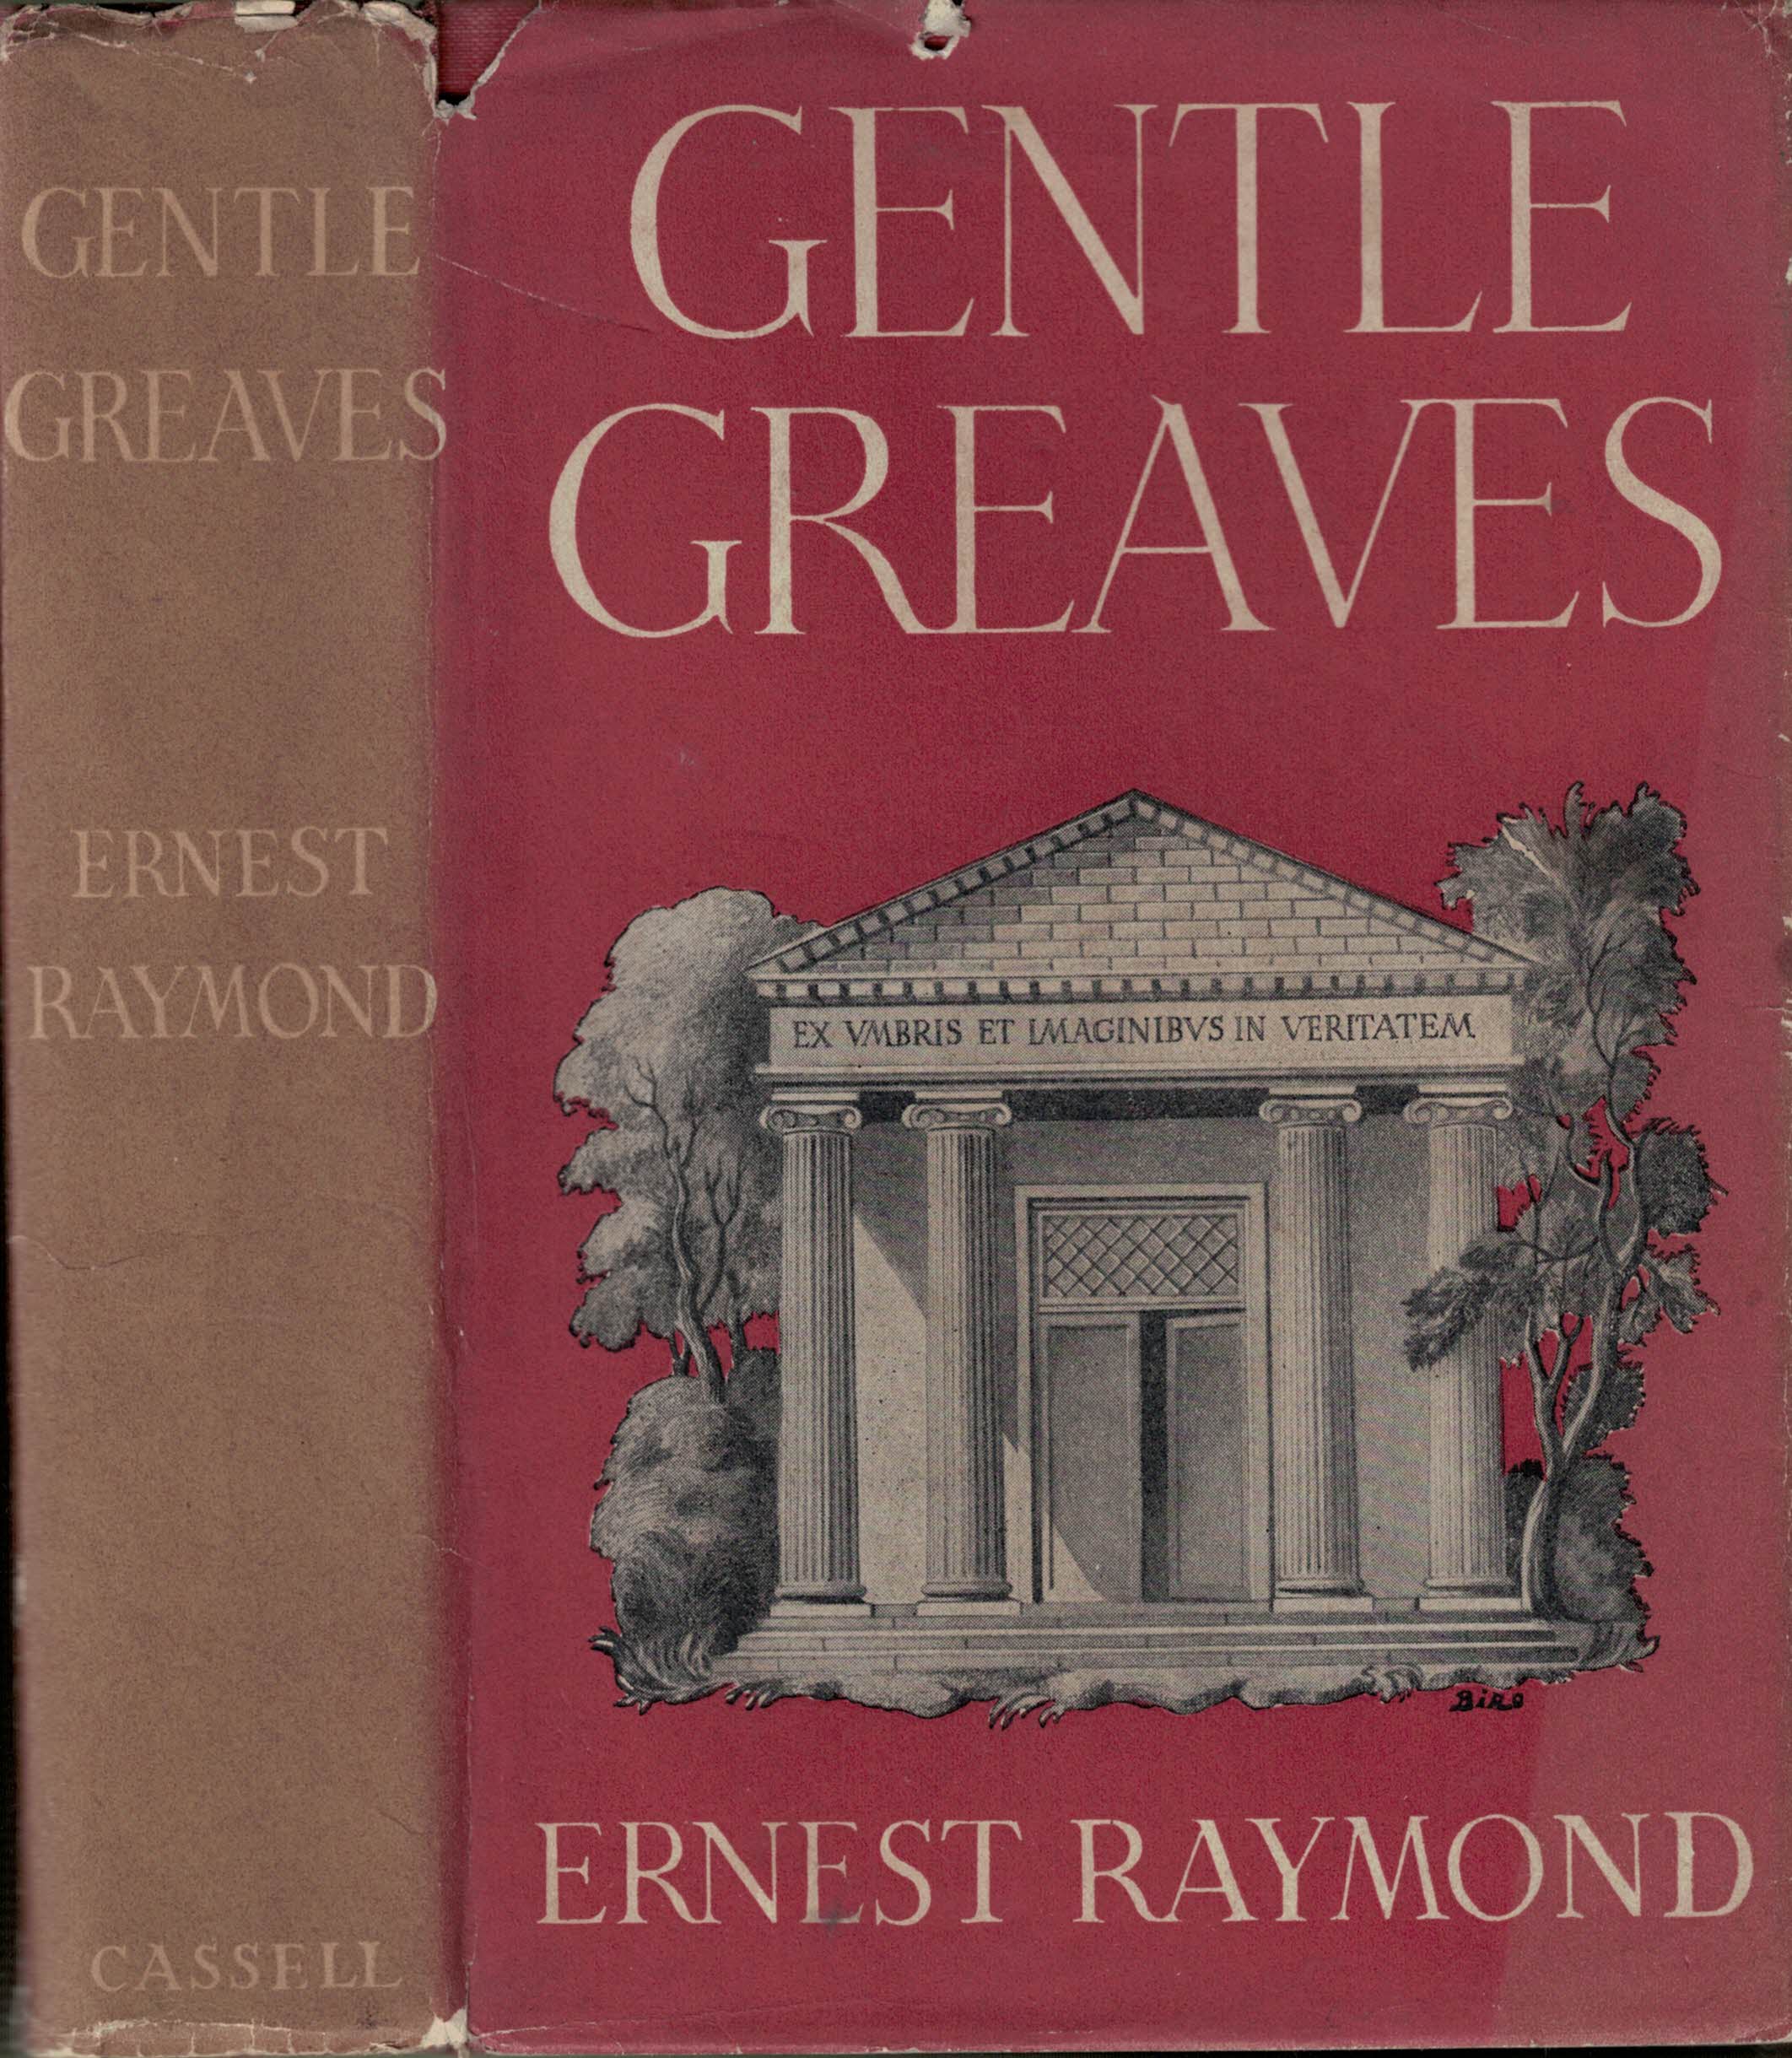 RAYMOND, ERNEST - Gentle Greaves